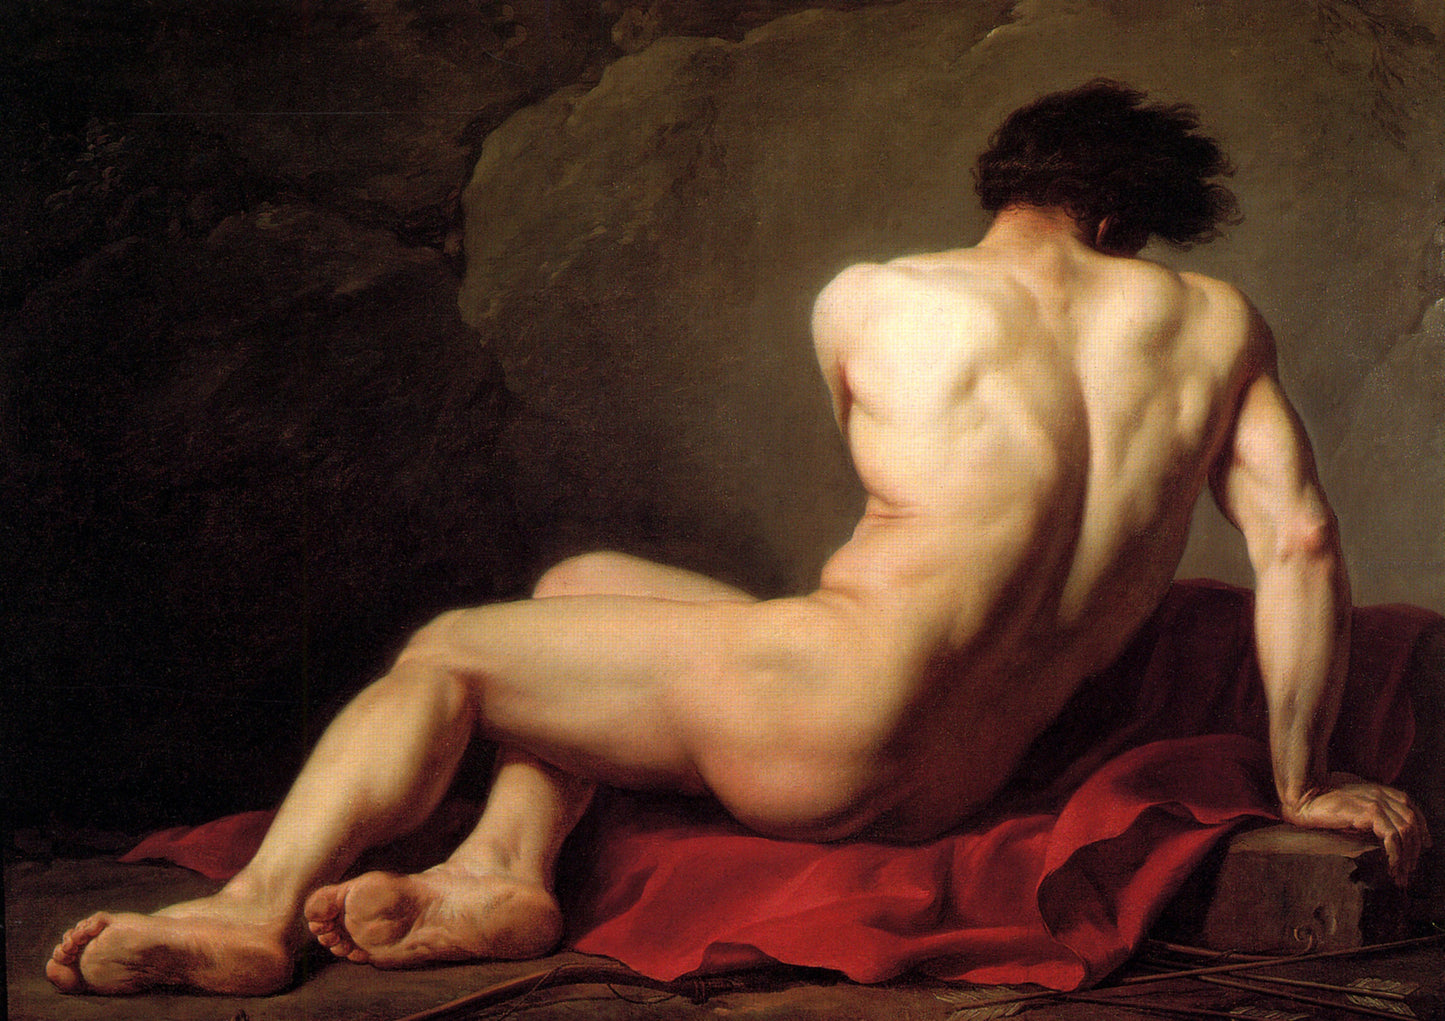 Male Nude known as Patroclus